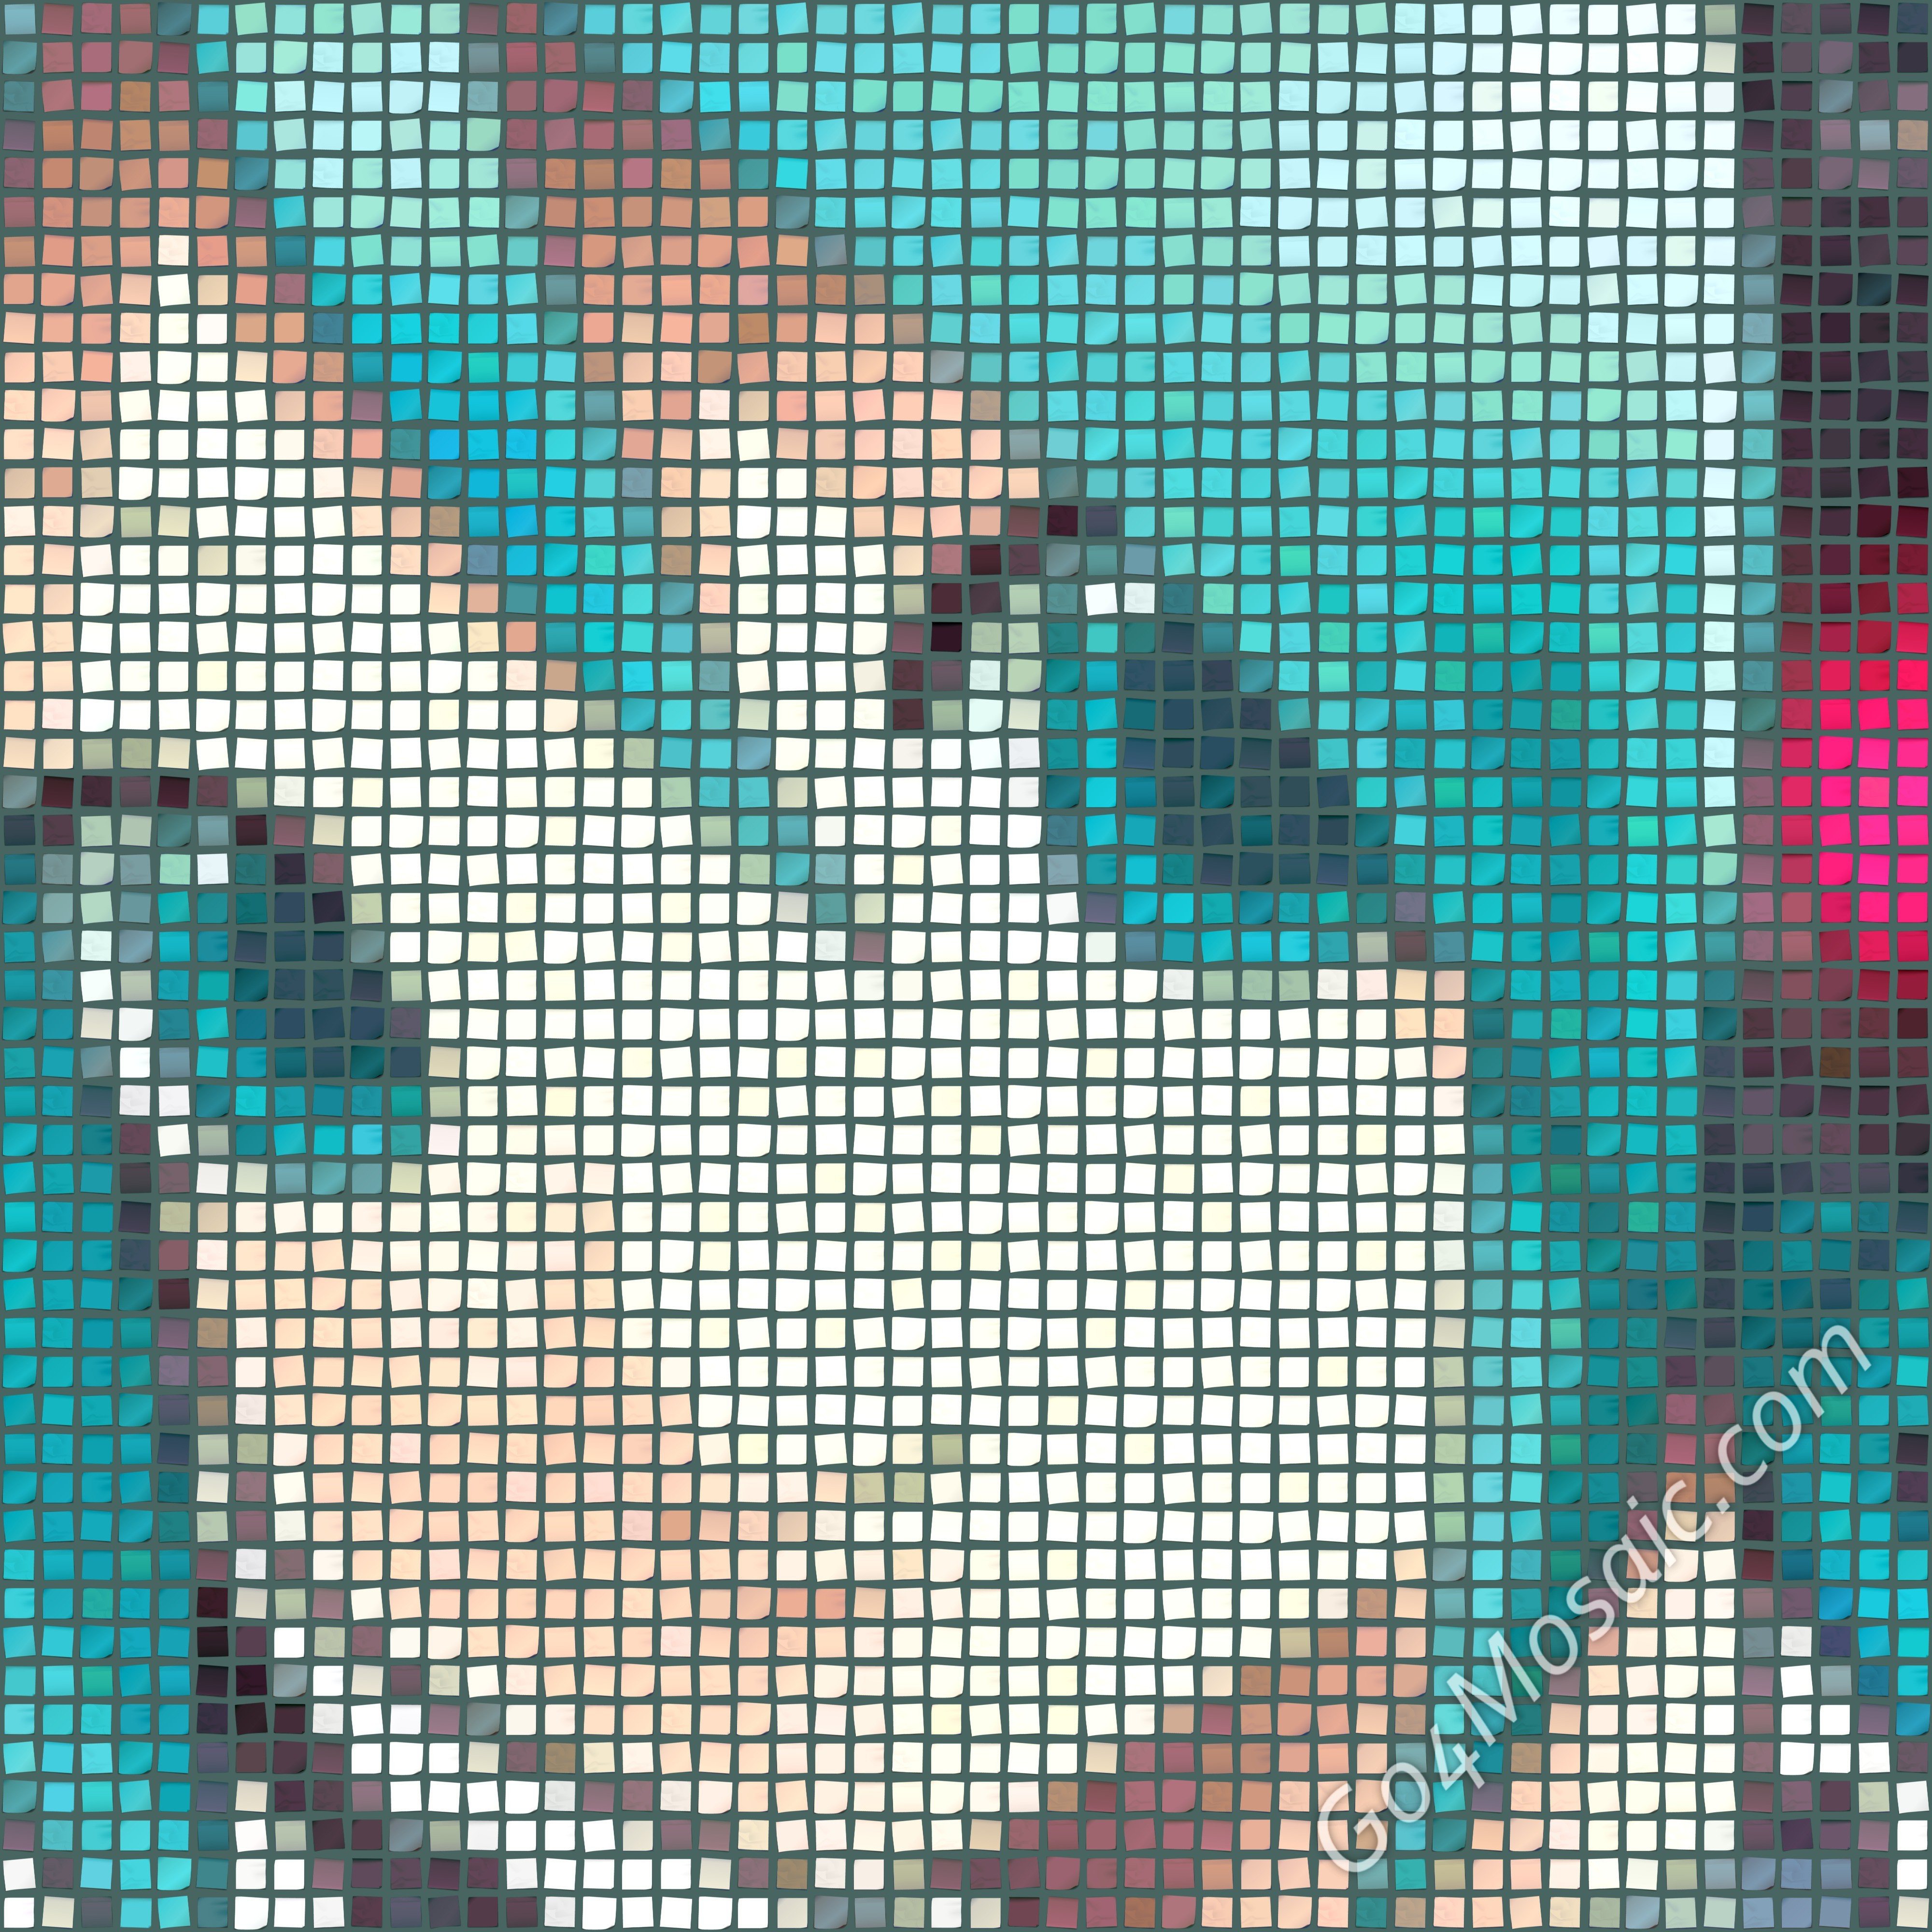 Hatsune Miku Pixel Art Grid Hatsune Miku Mosaic From Postits Go4mosaic Blog